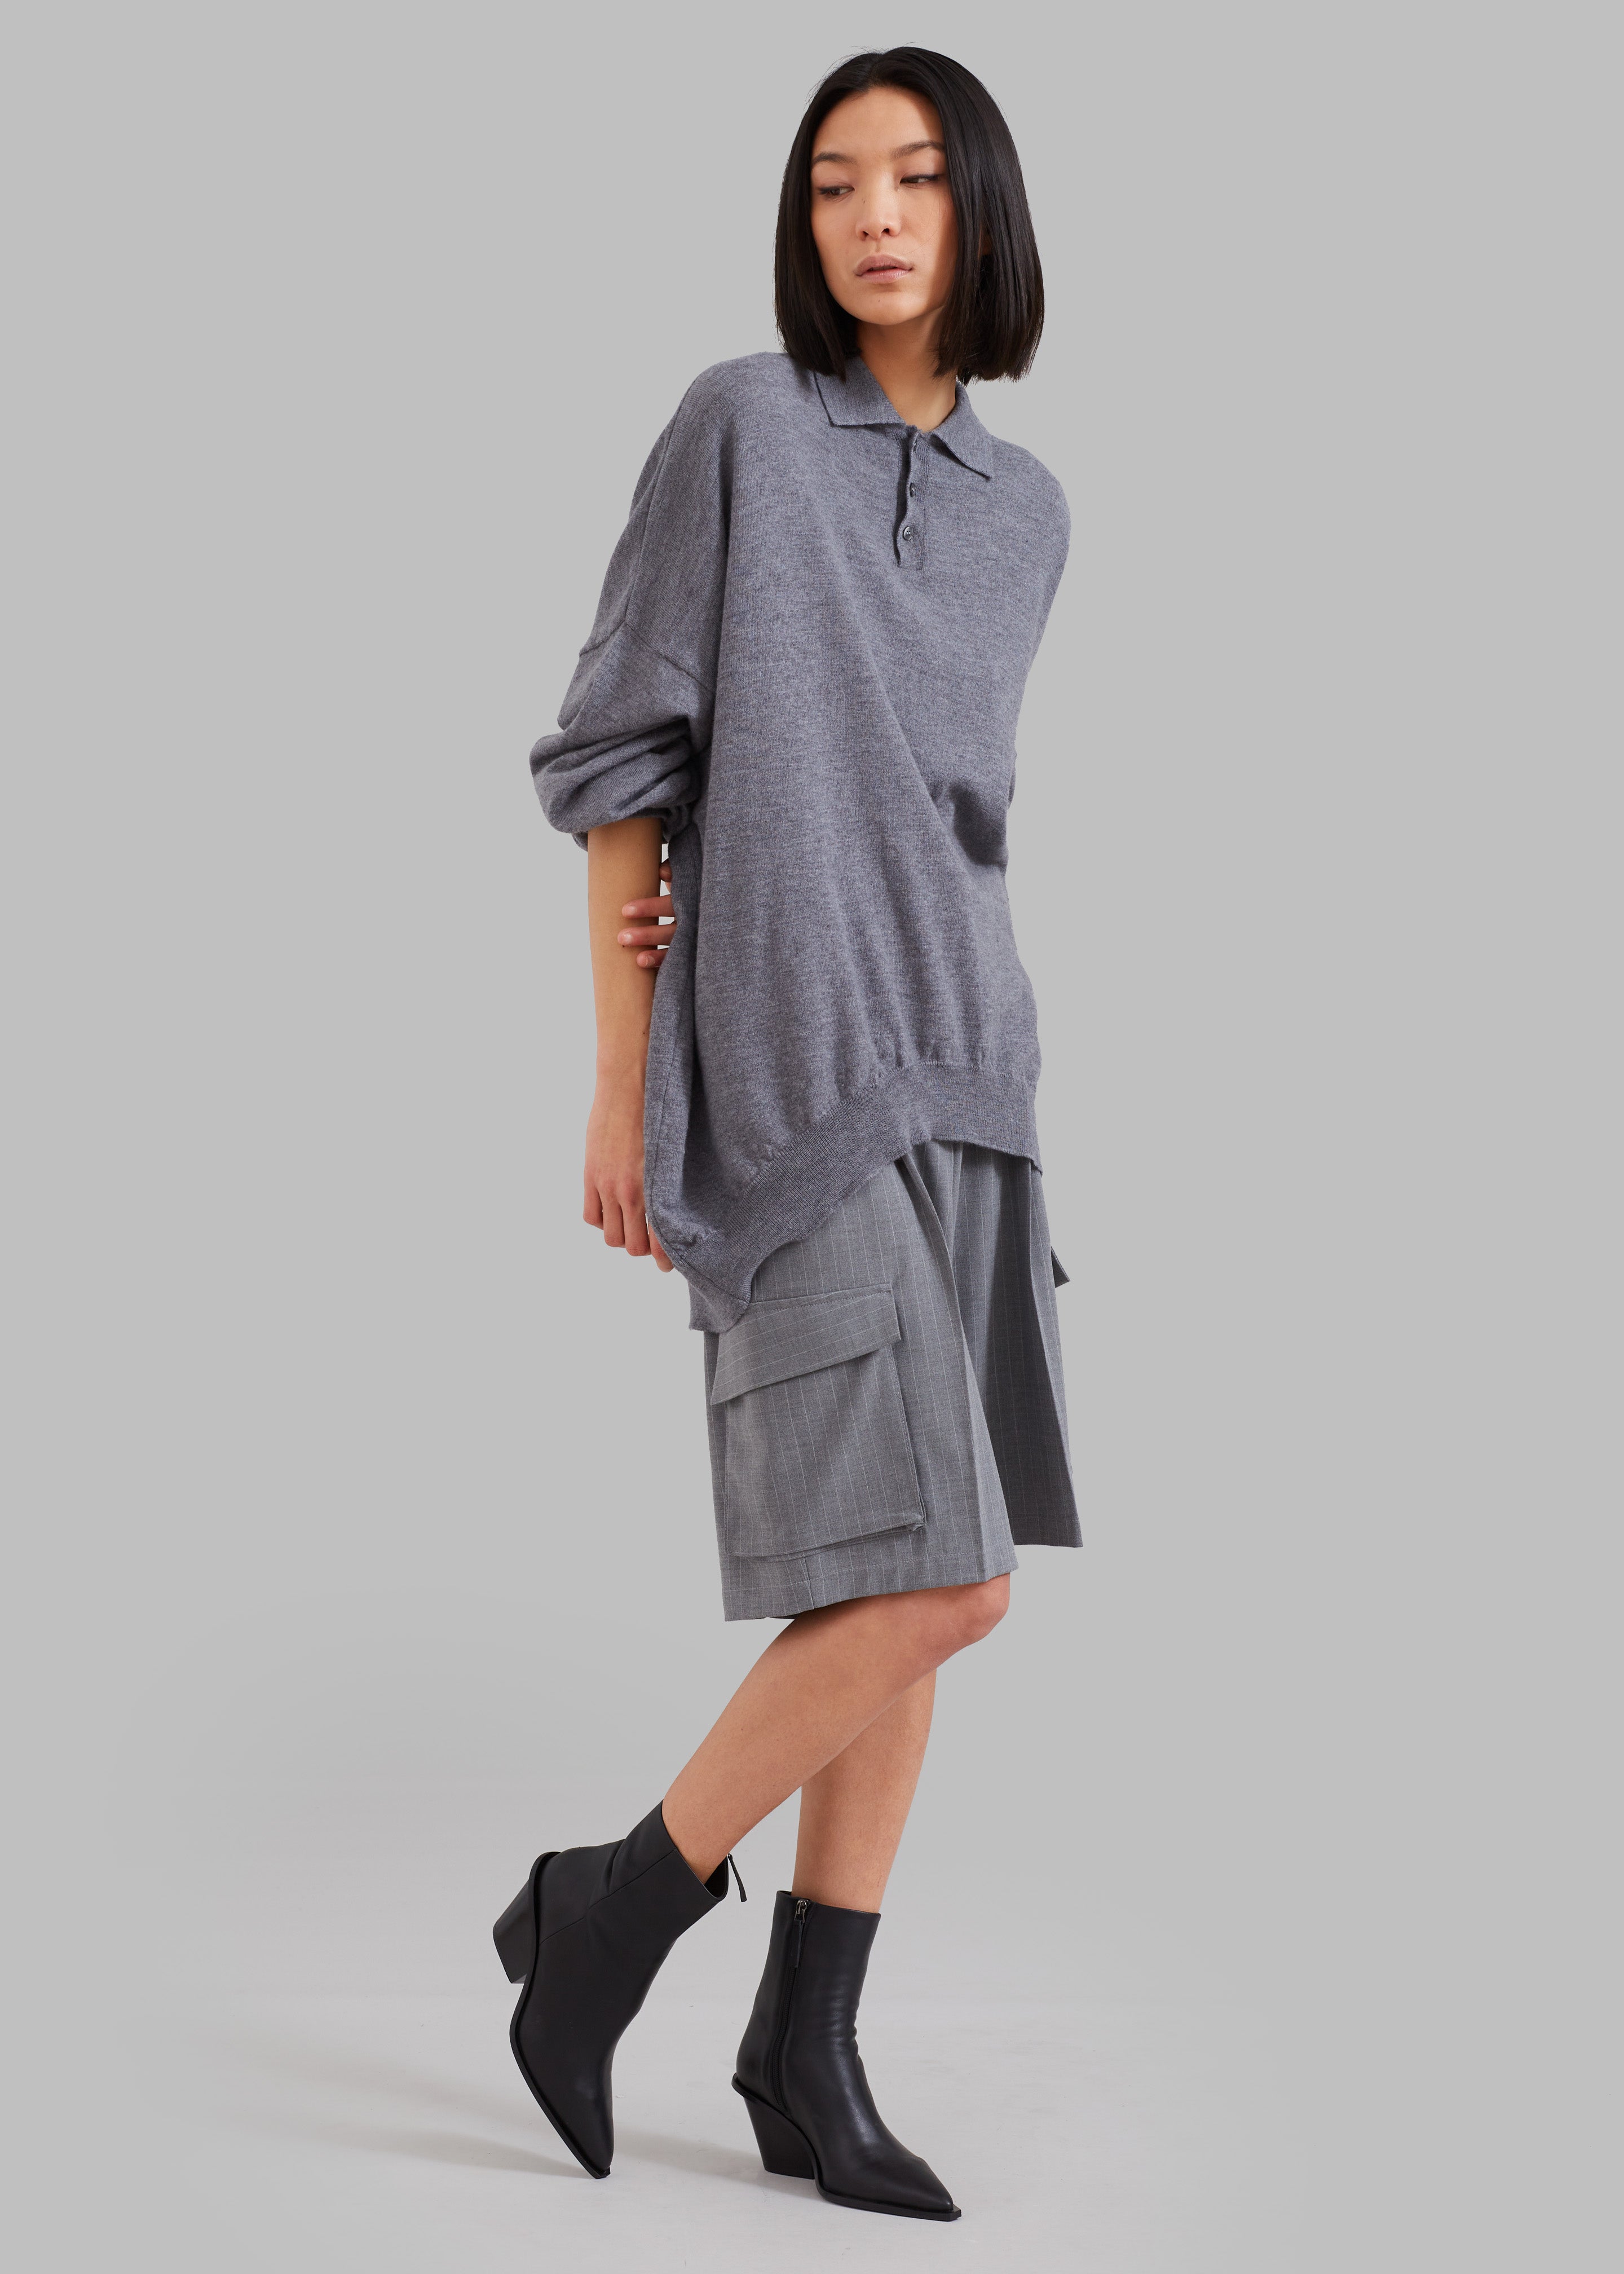 Meriel Polo Sweater - Grey - 1